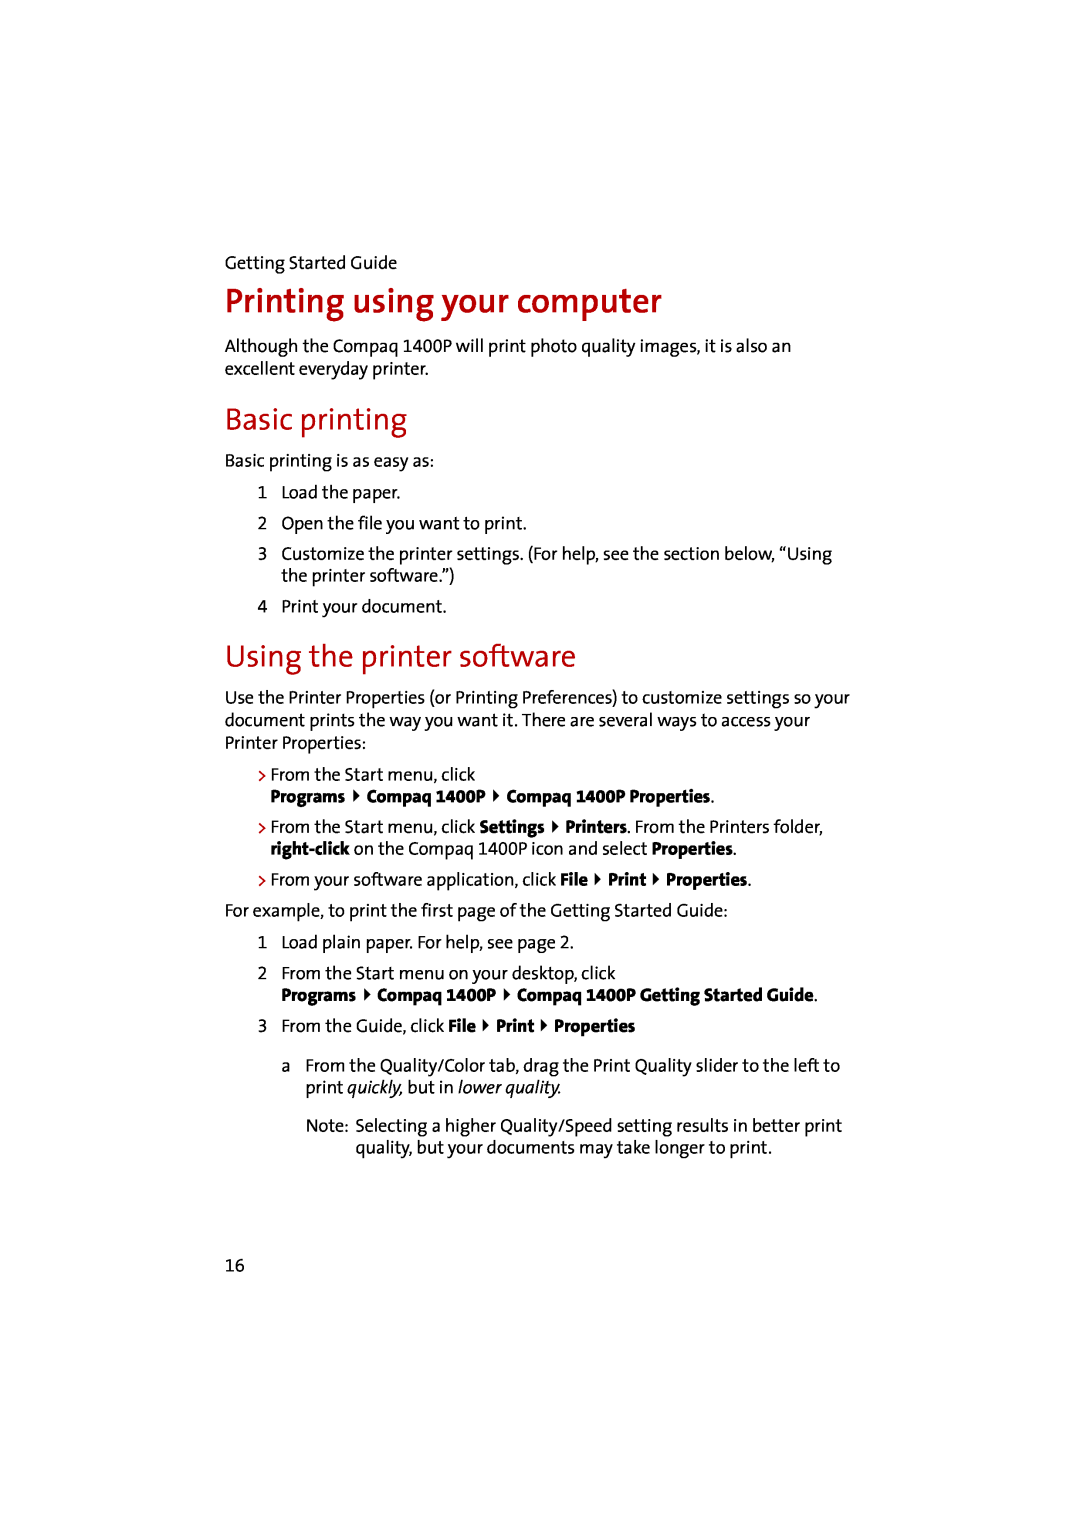 Compaq 1400P manual Printing using your computer, Basic printing, Using the printer software 